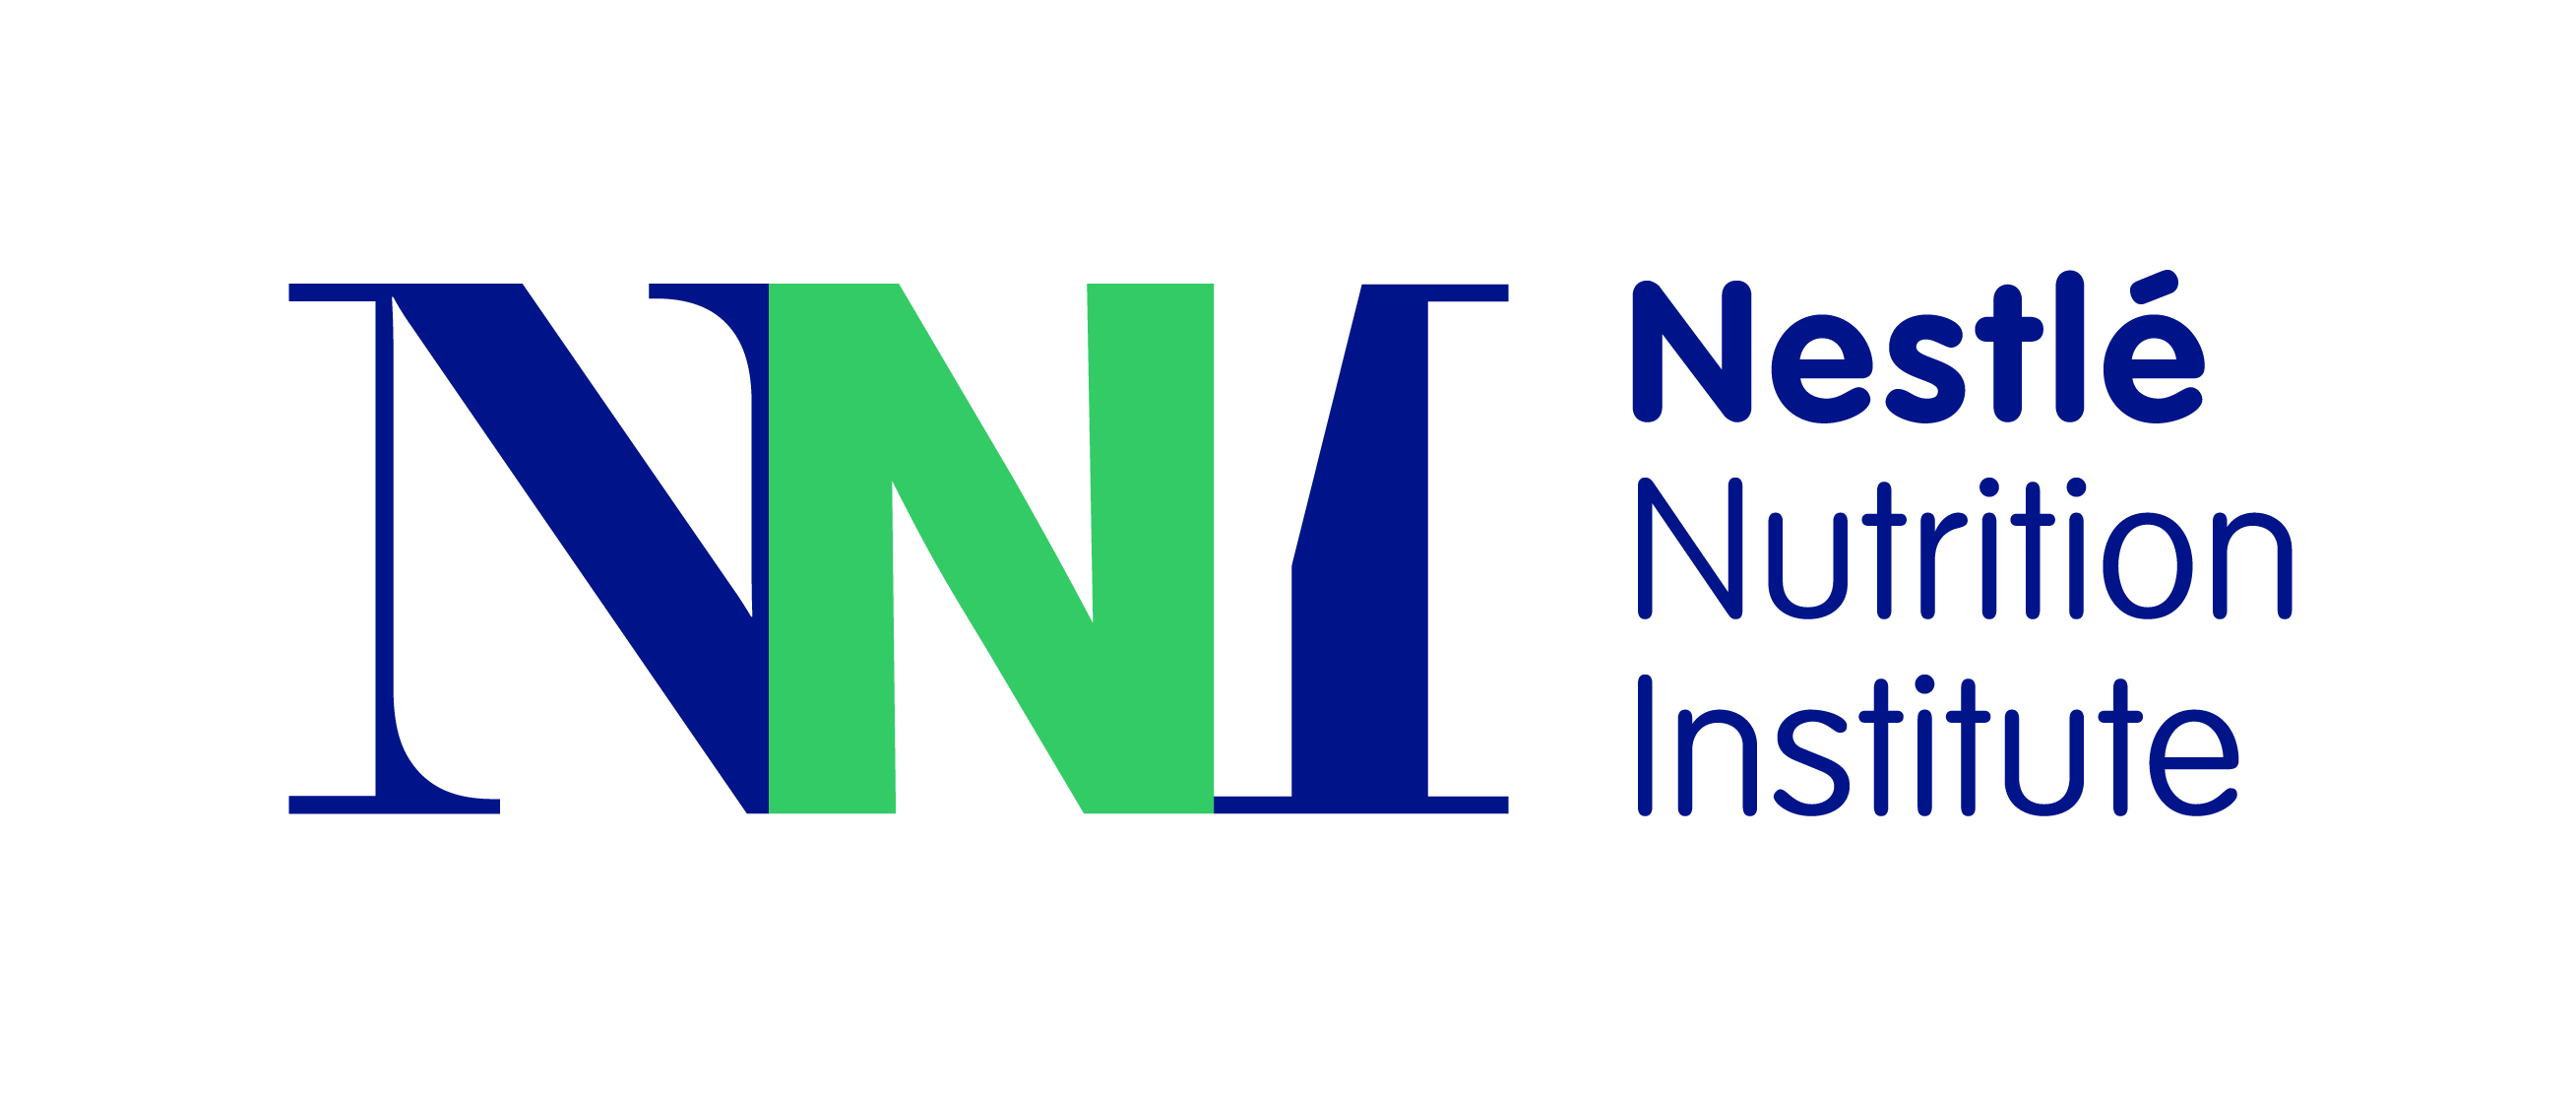 Nestlé Nutrition Institute